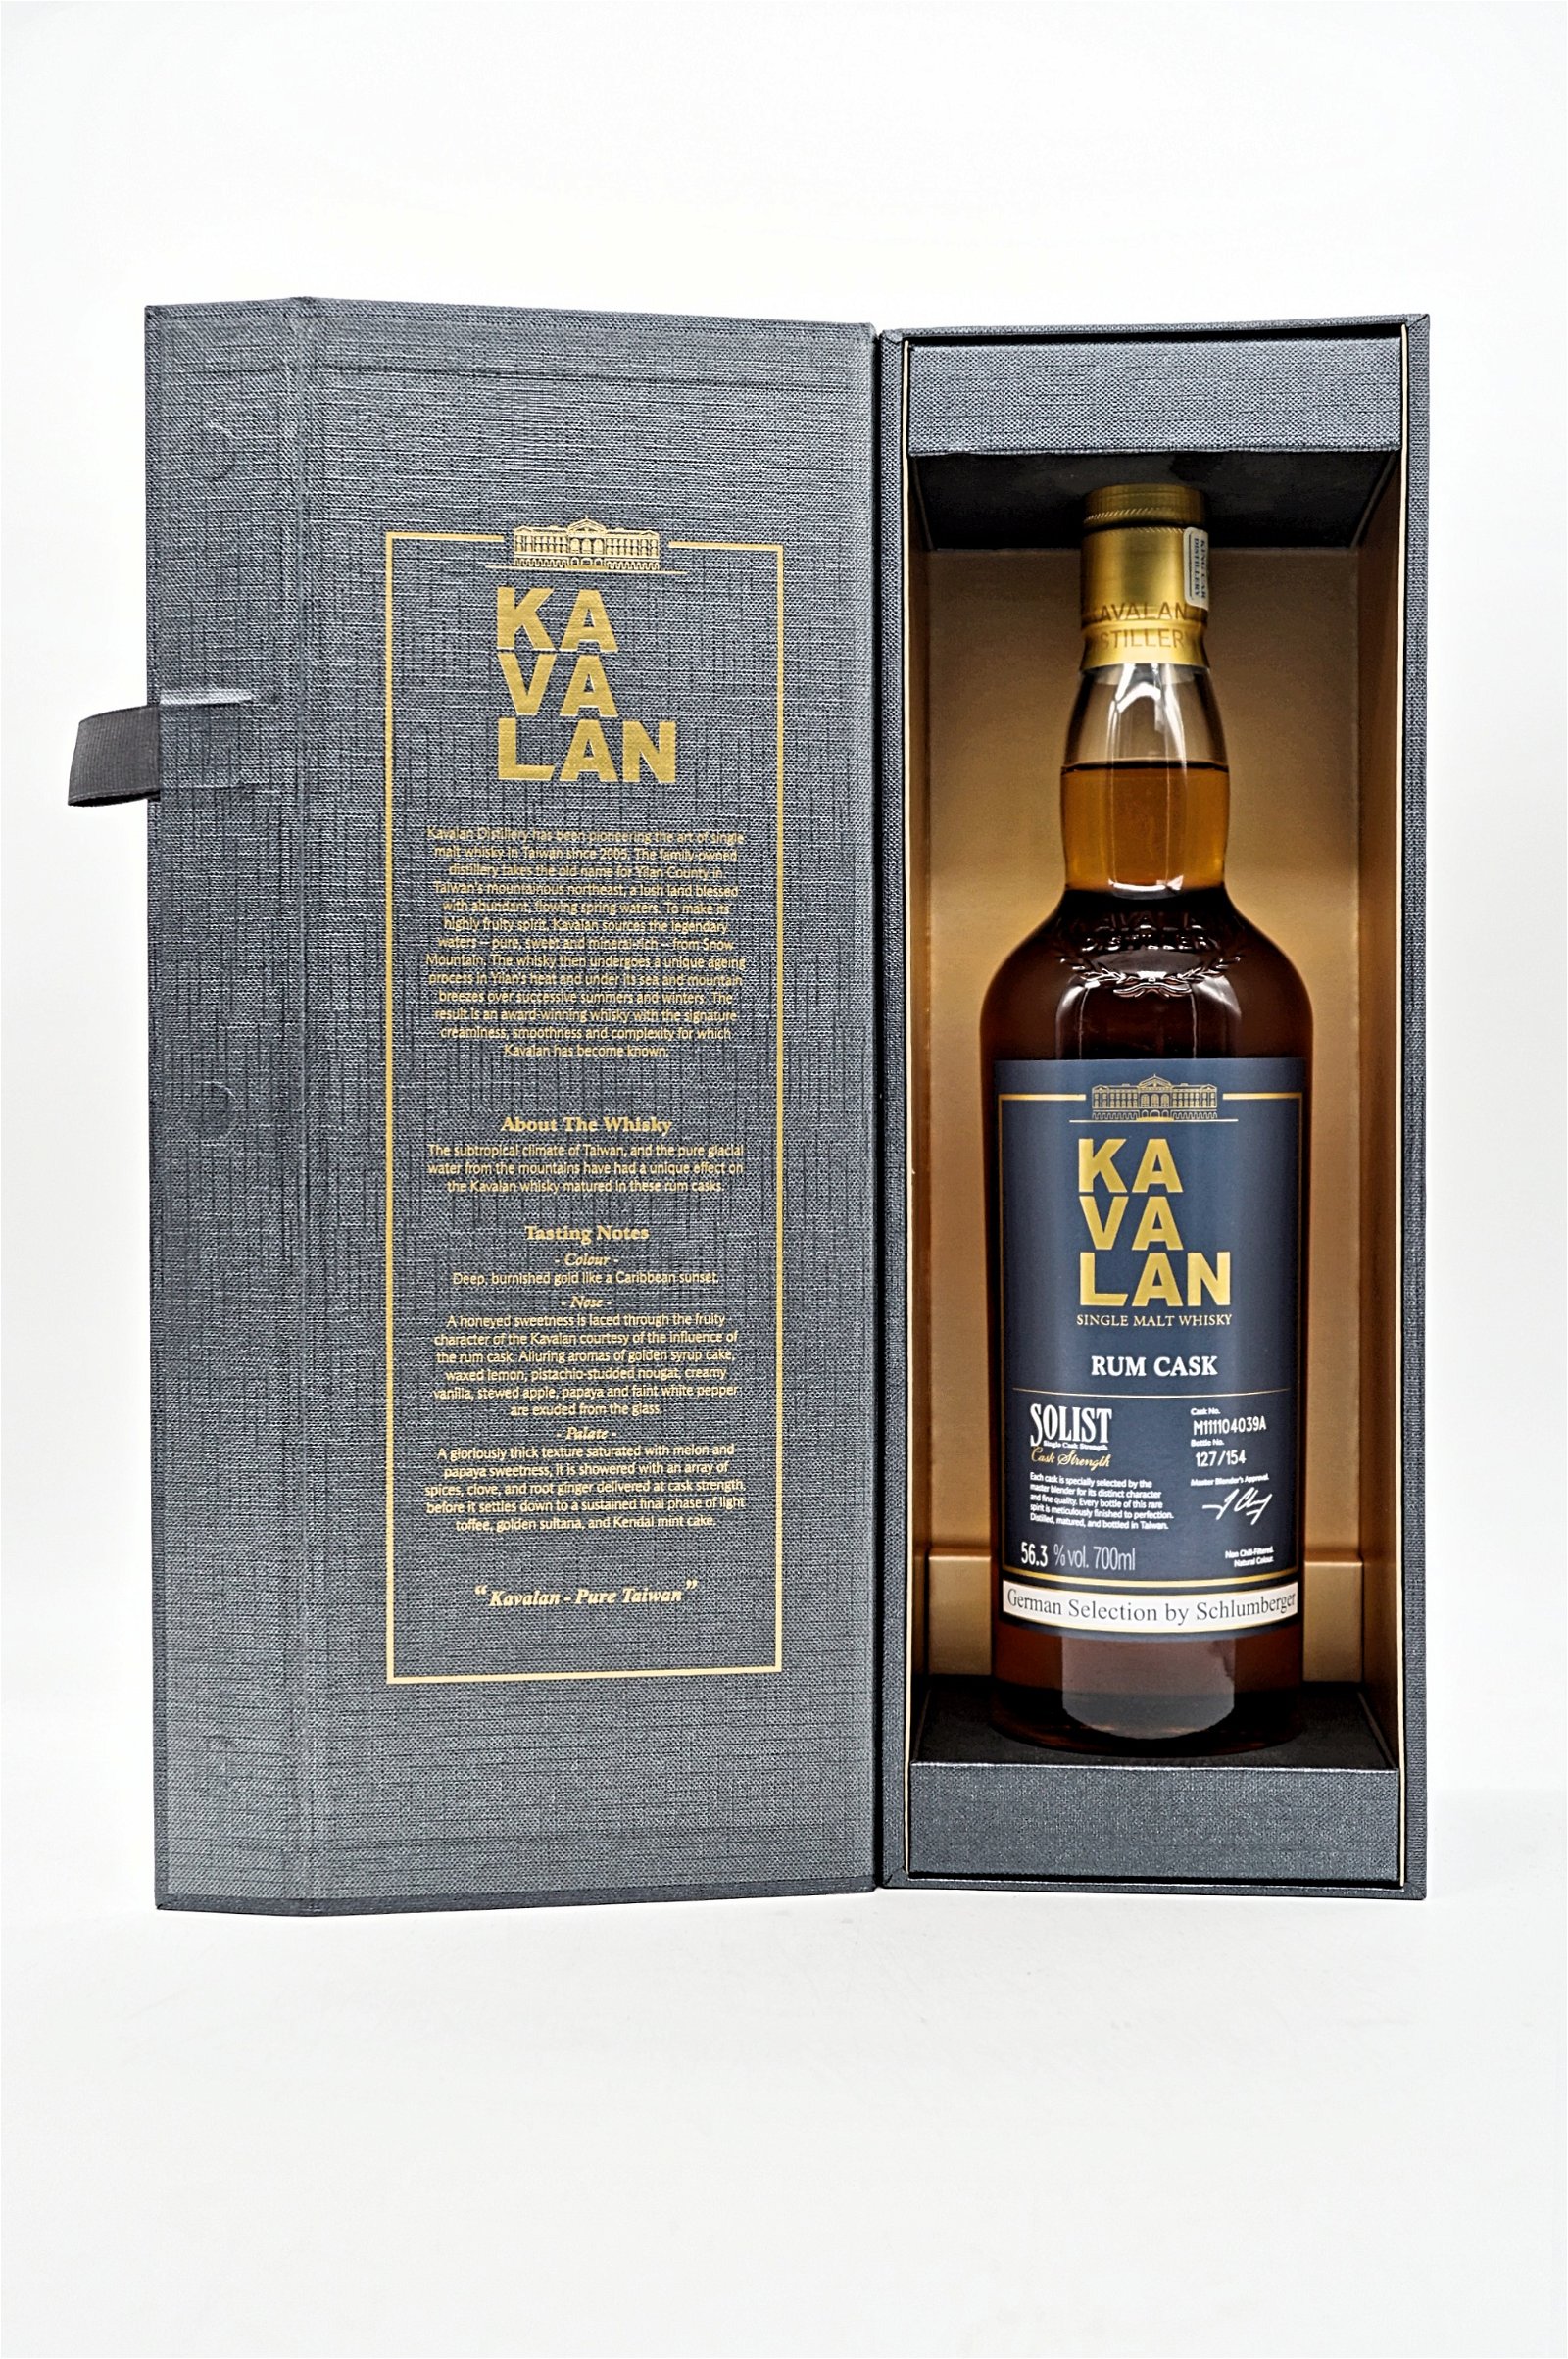 vKavalan Solist Rum Cask German Selection by Schlumberger Taiwan Single Malt Whisky